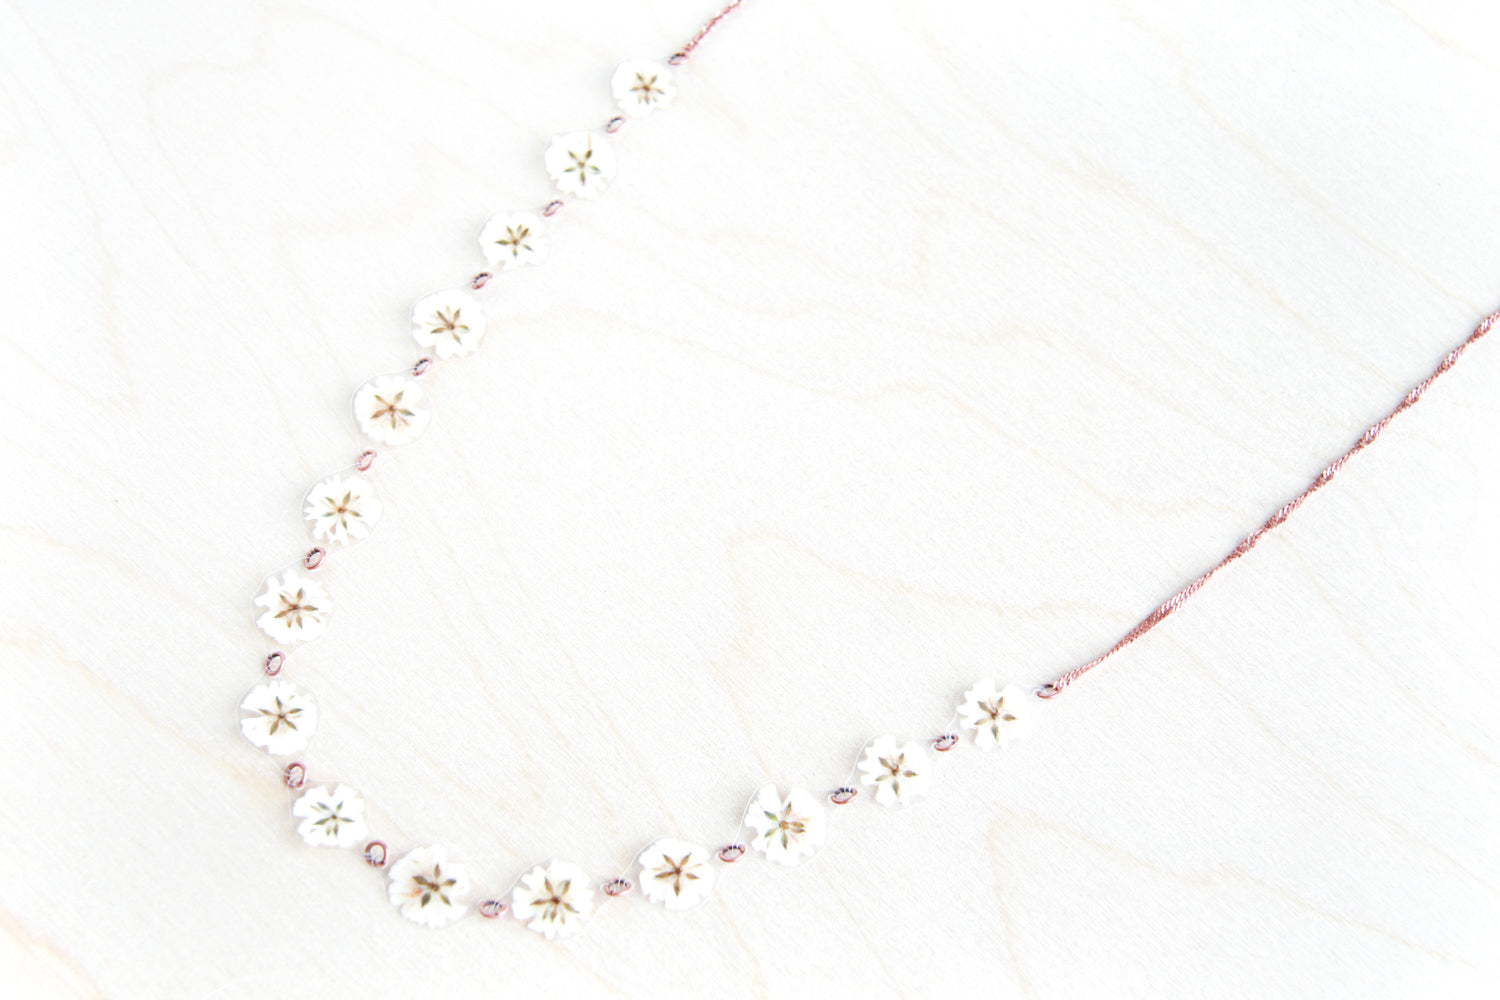 White Baby’s Breath Flower ‘Daisy Chain’ Necklace